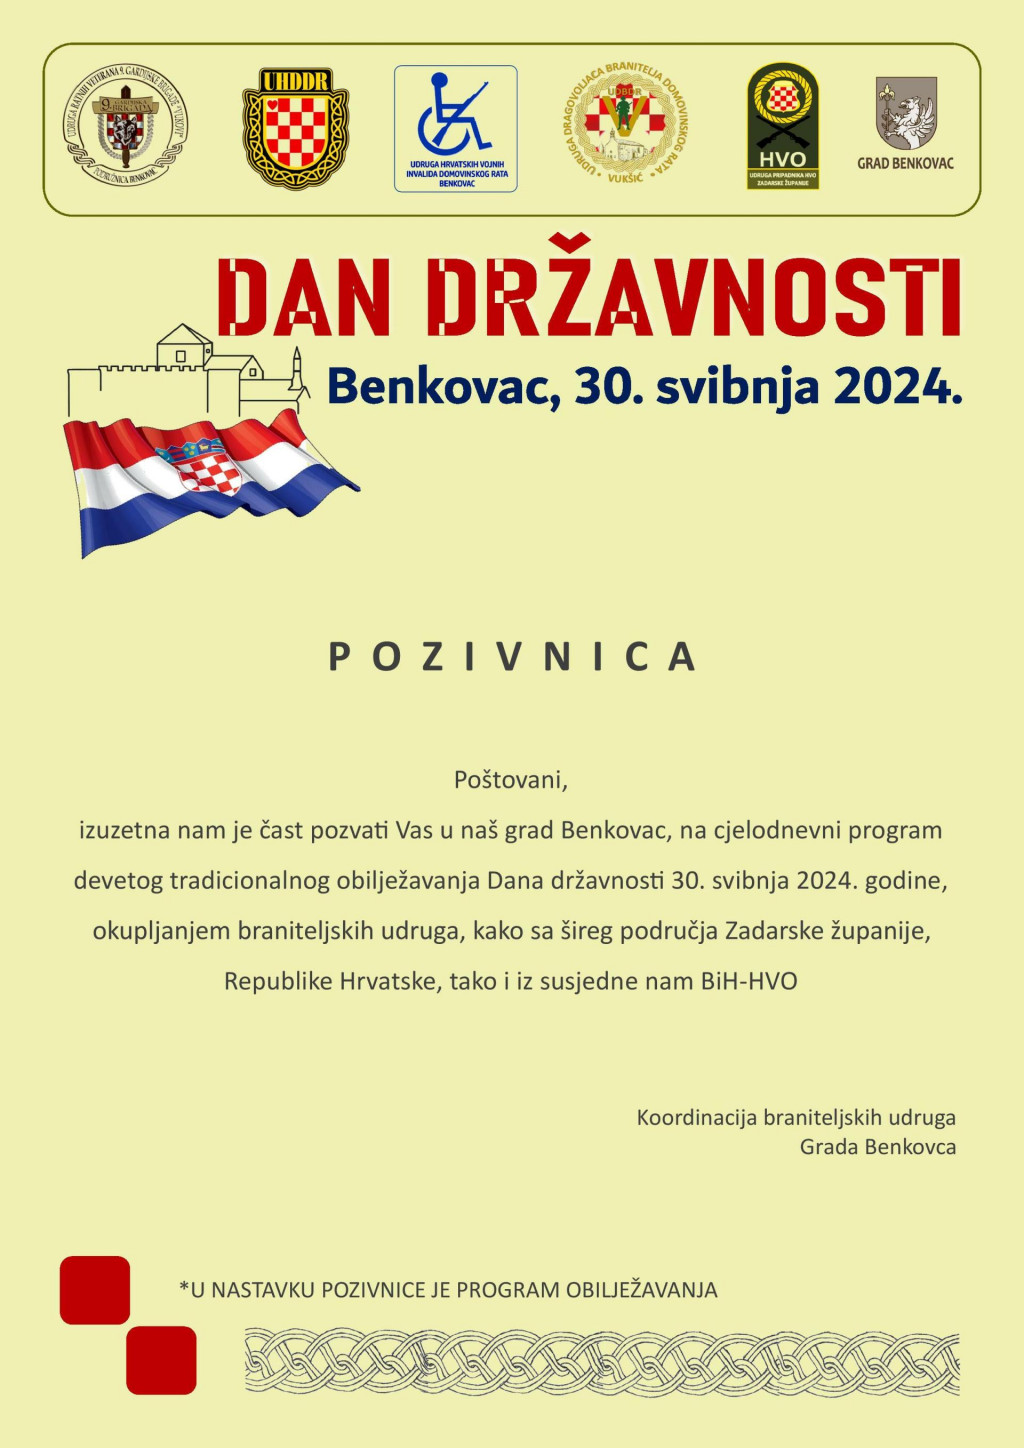 &lt;p&gt;Dan državnosti Benkovac&lt;/p&gt;